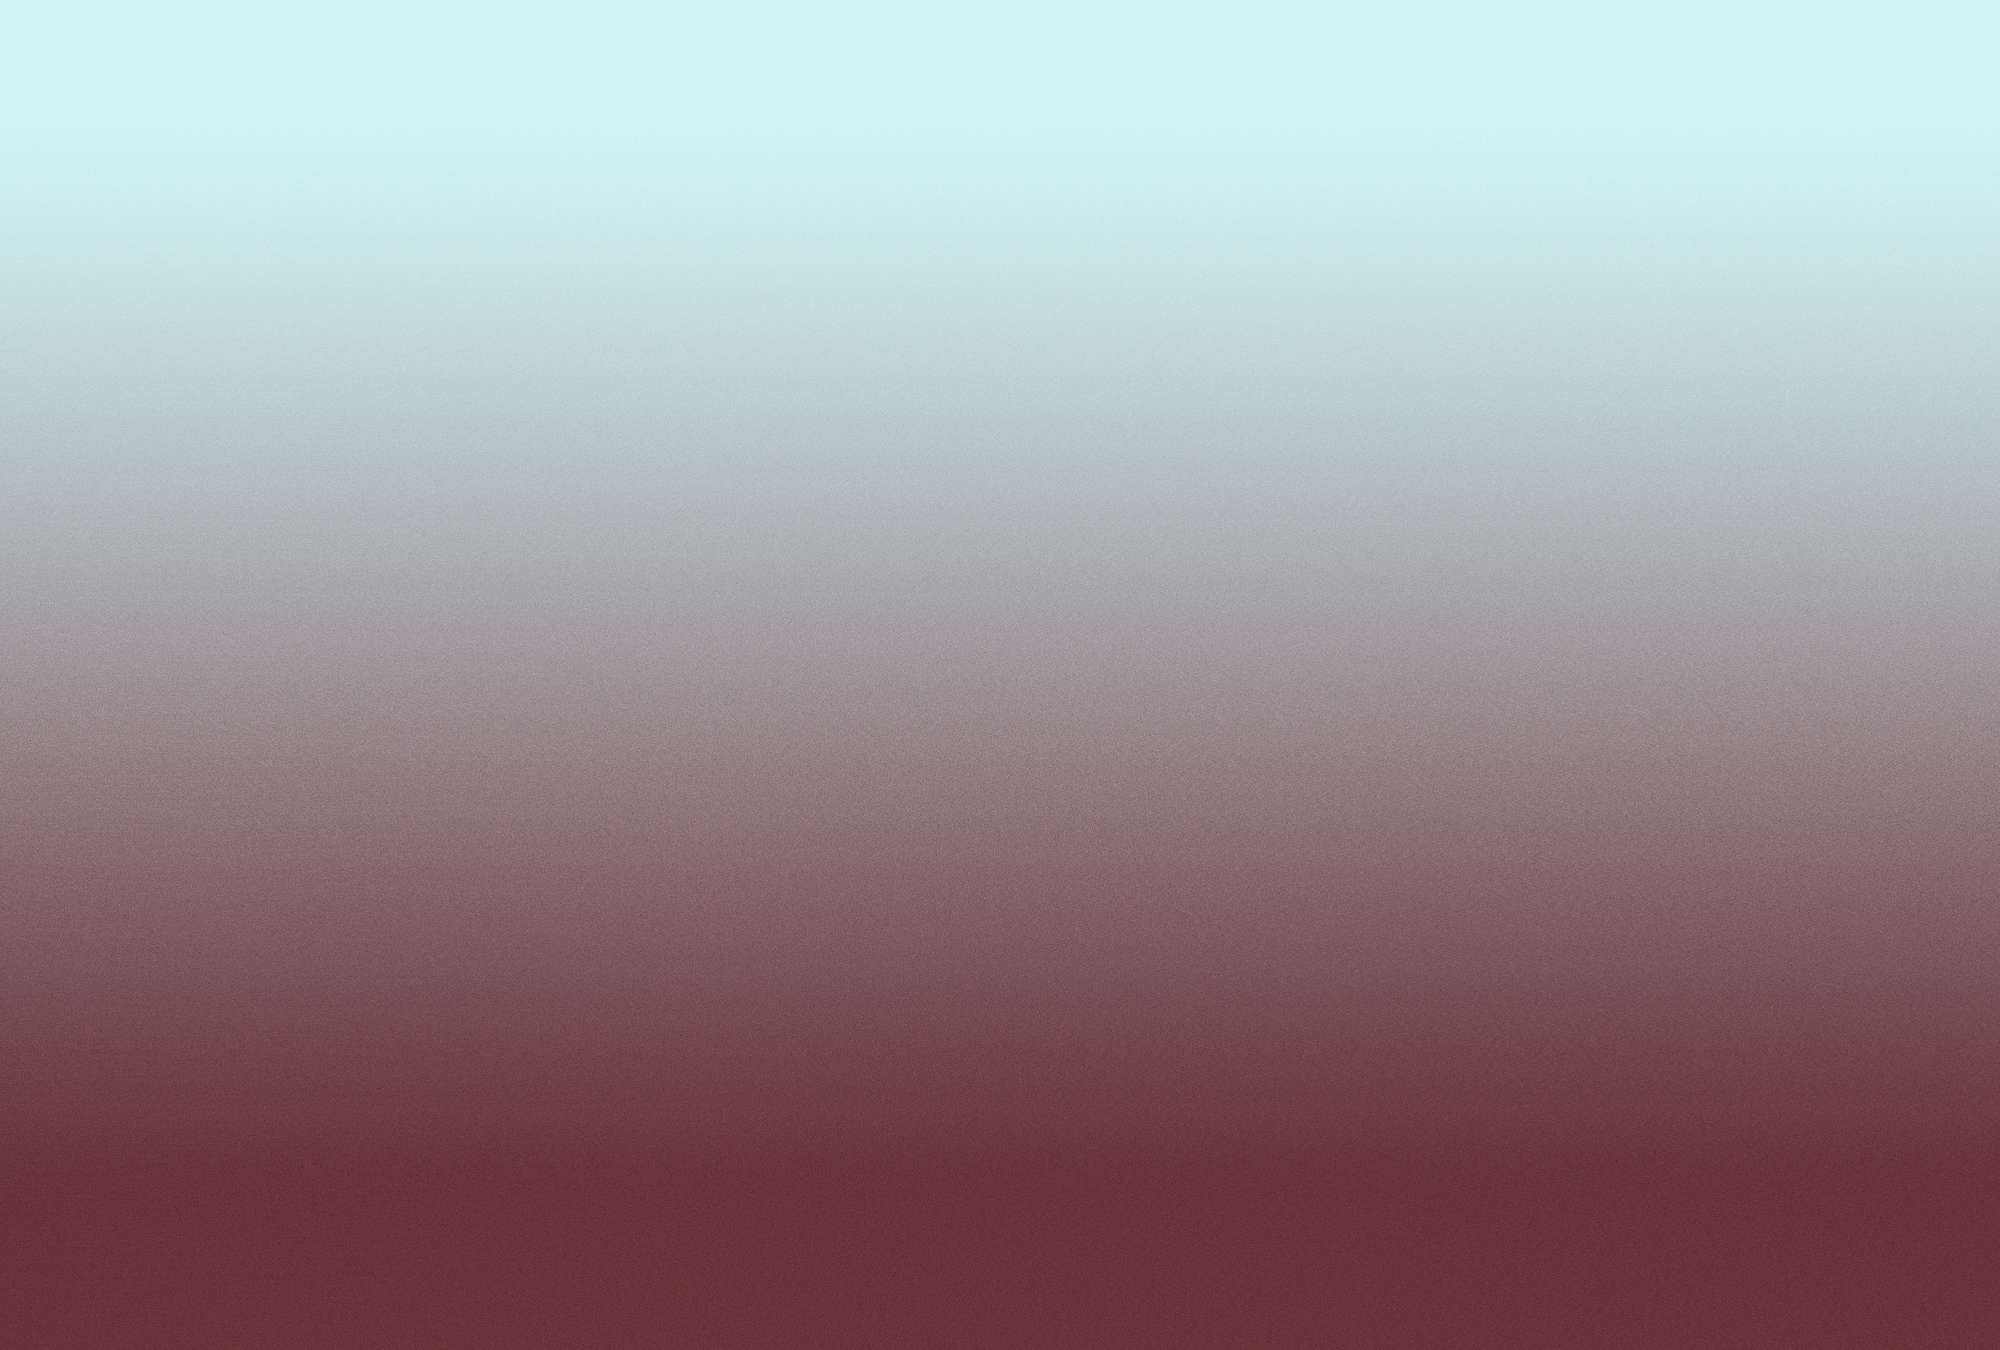             Colour Studio 3 - Ombre photo wallpaper light blue & wine red with colour gradient
        